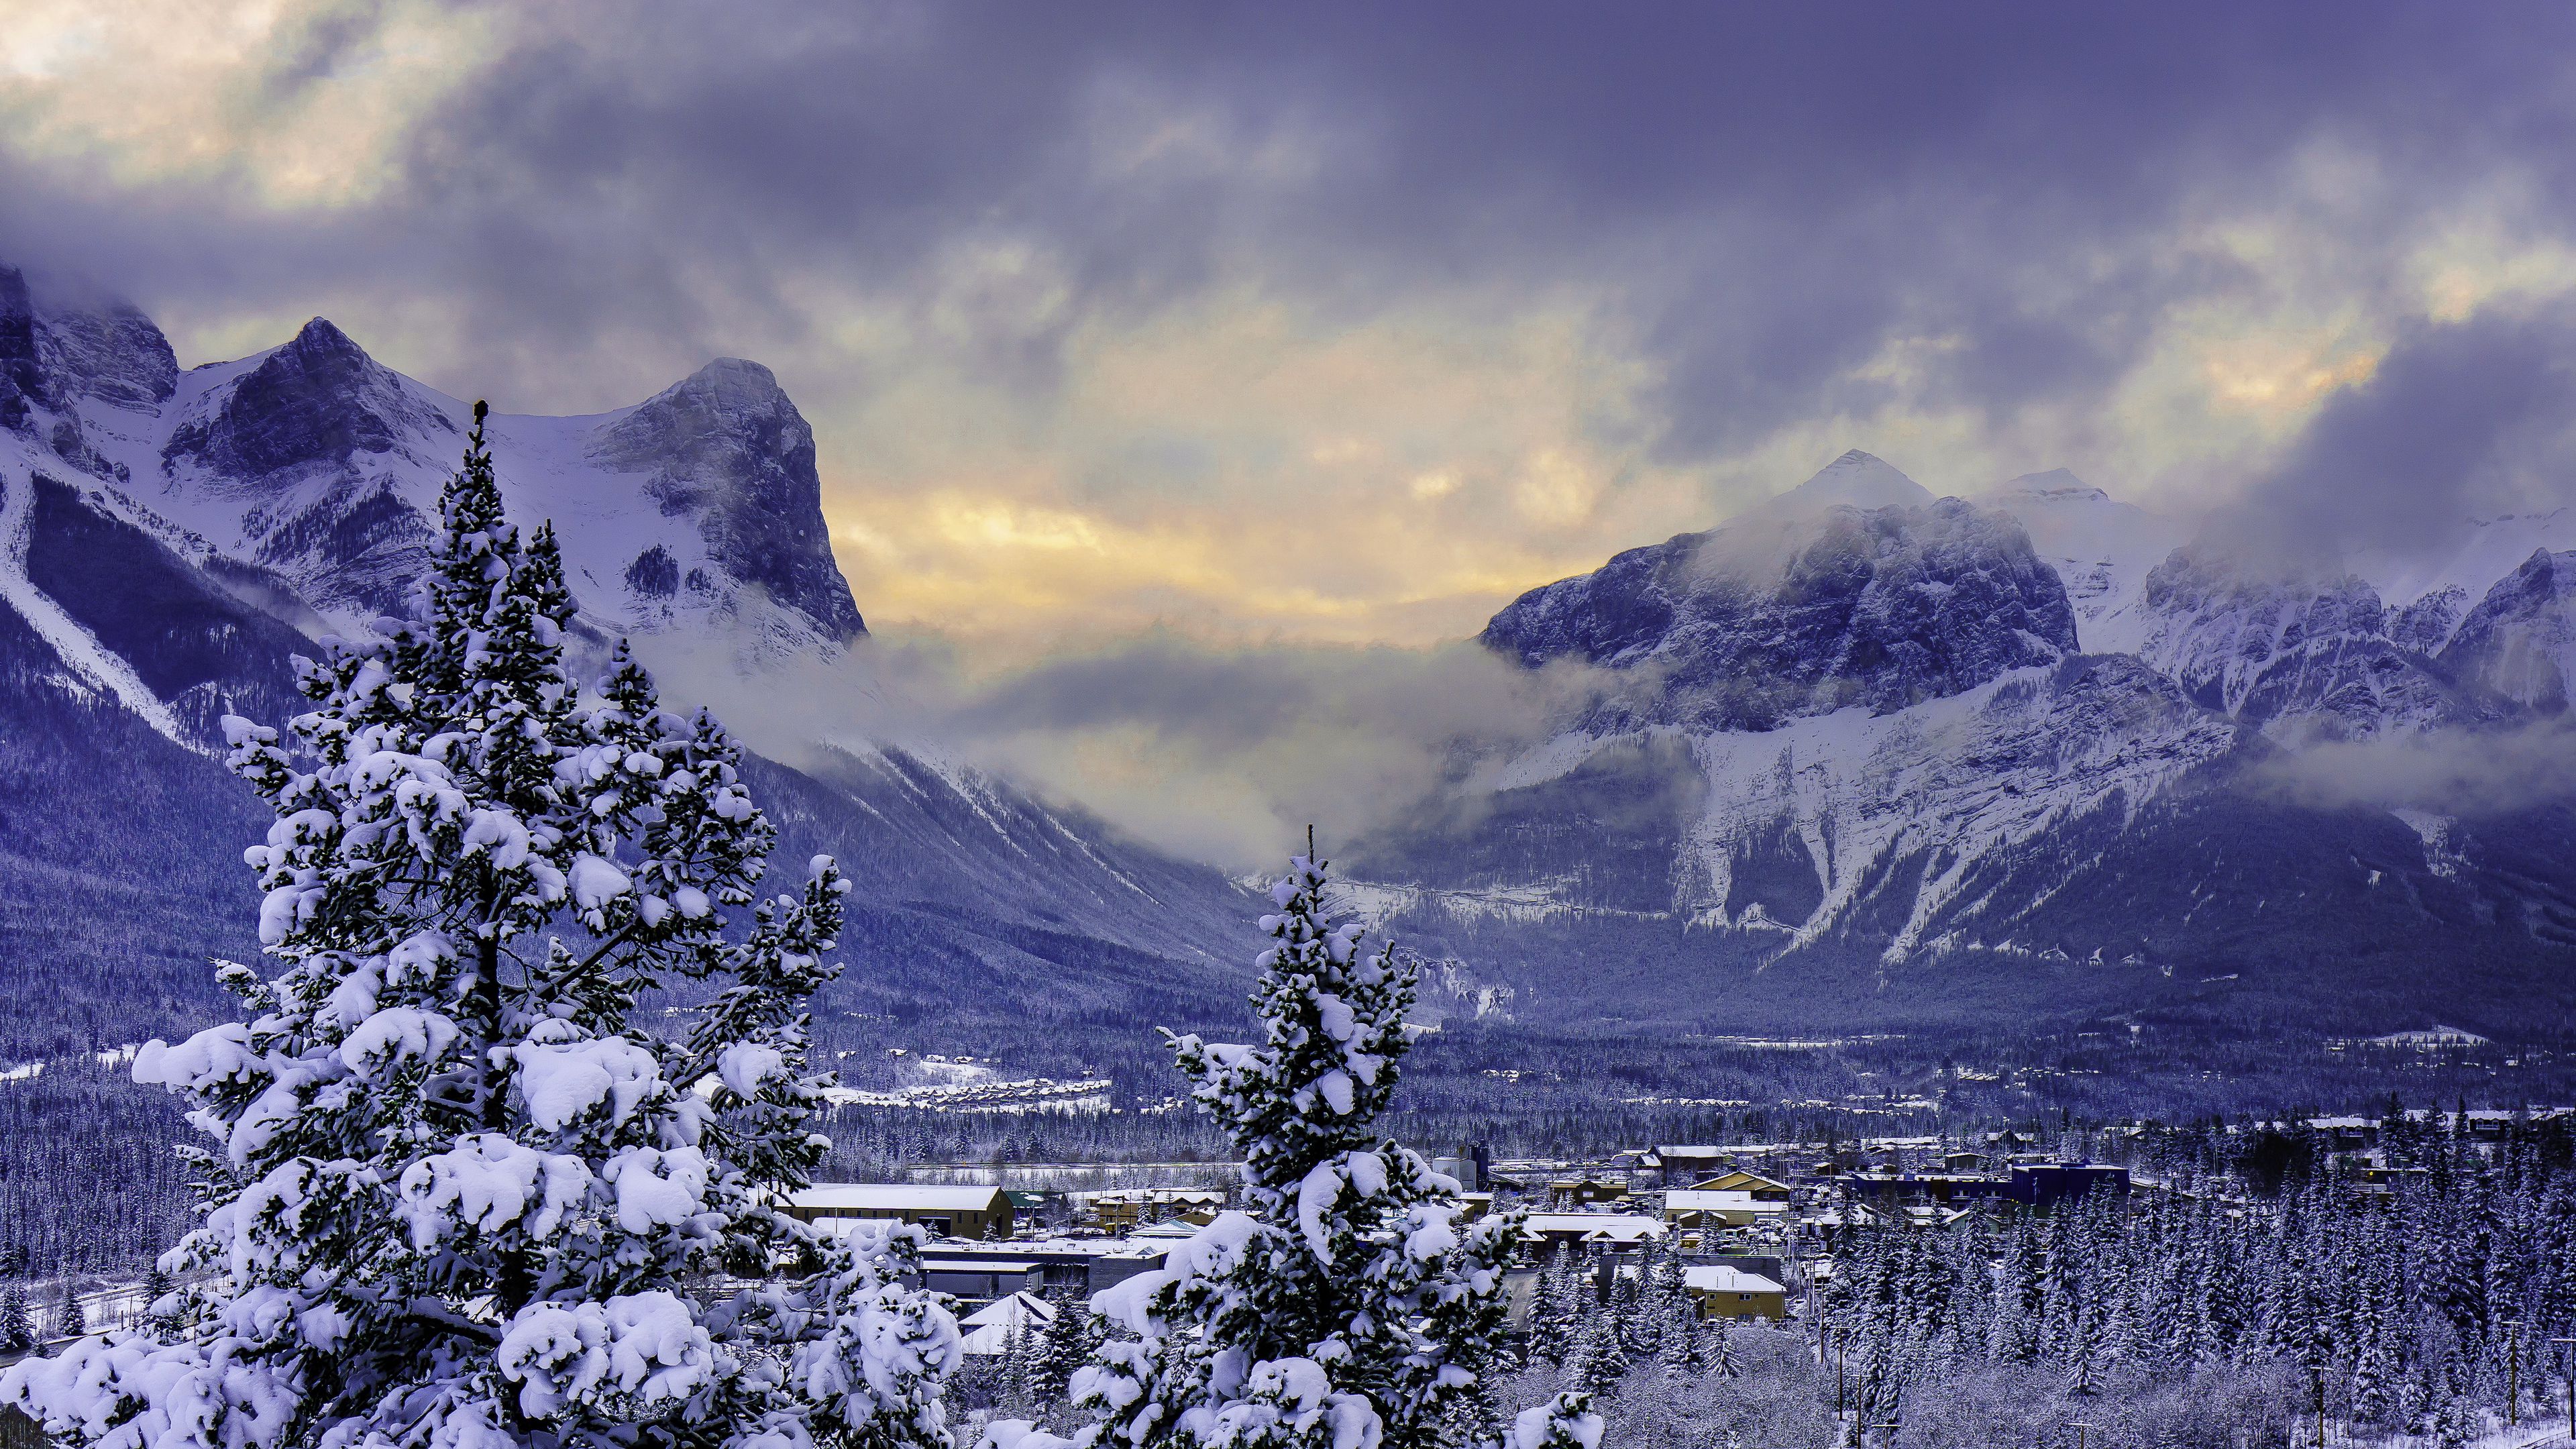 Download wallpaper 3840x2160 canada, mountain, alberta, banff national park, snow, winter 4k uhd 16:9 HD background